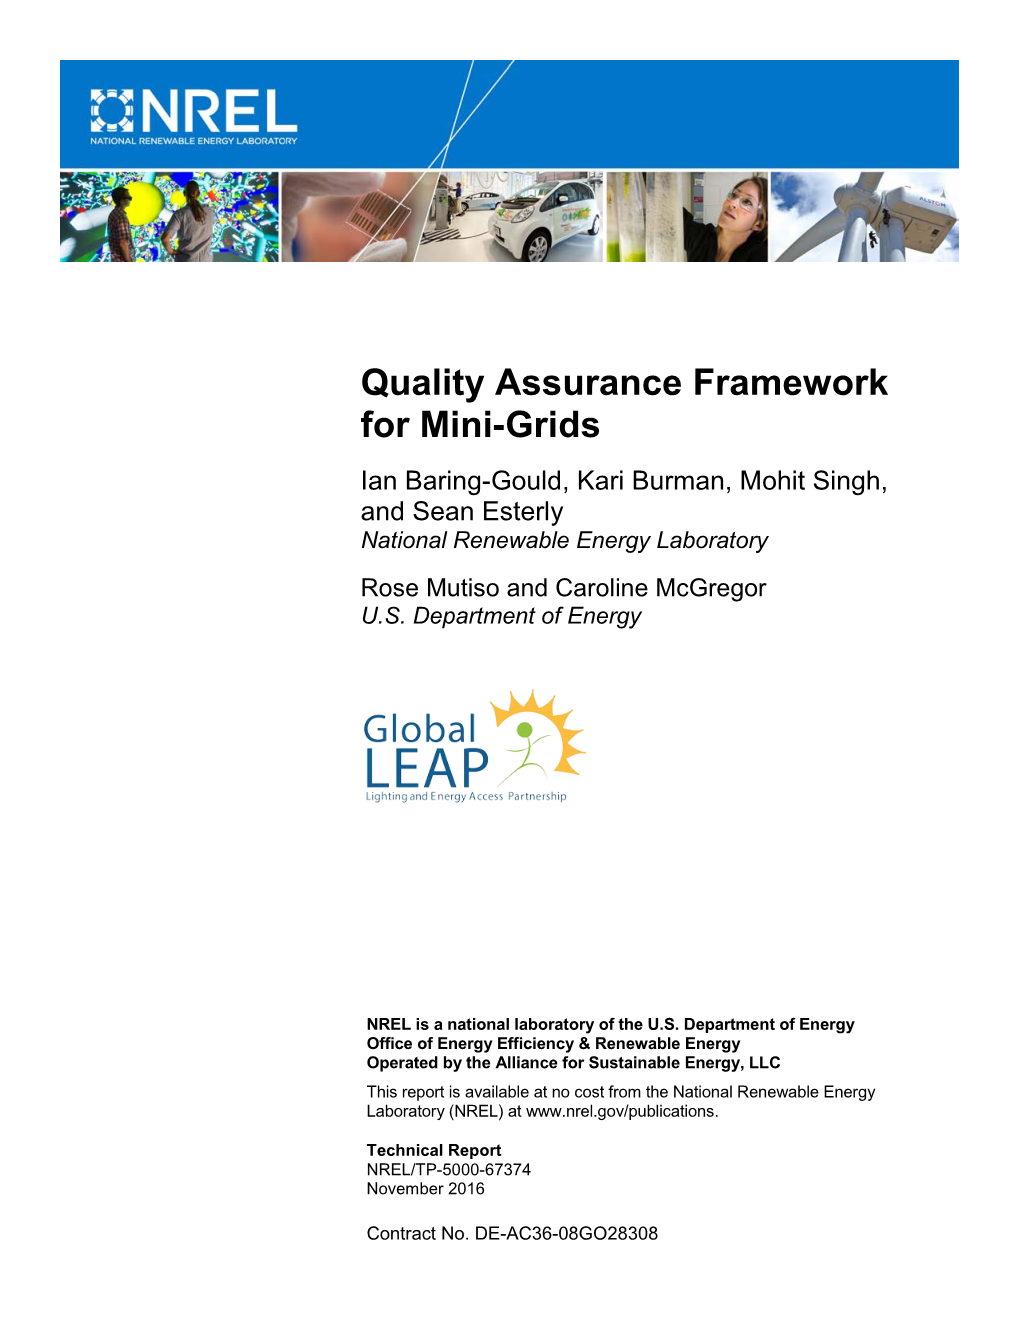 Quality Assurance Framework for Mini-Grids